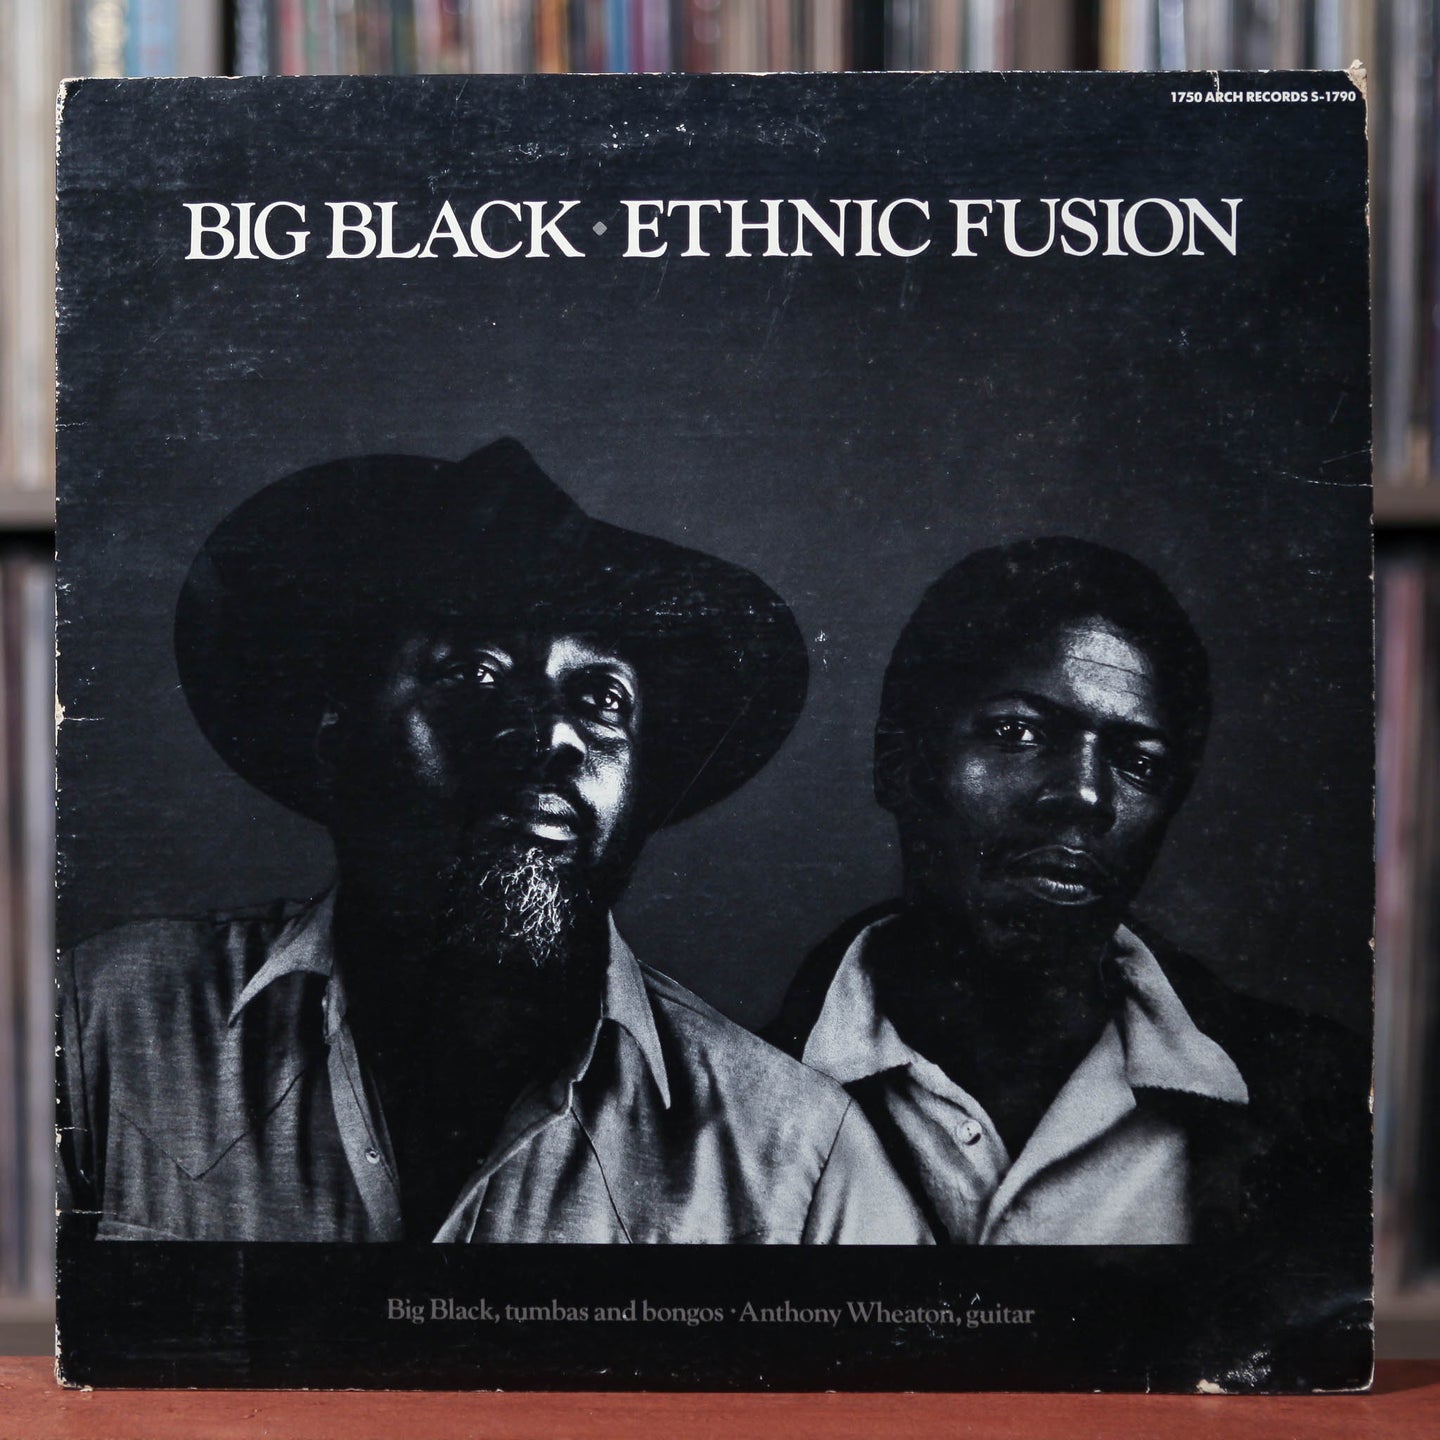 Big Black - Ethnic Fusion - 1982 - 1750 Arch Records, VG/VG